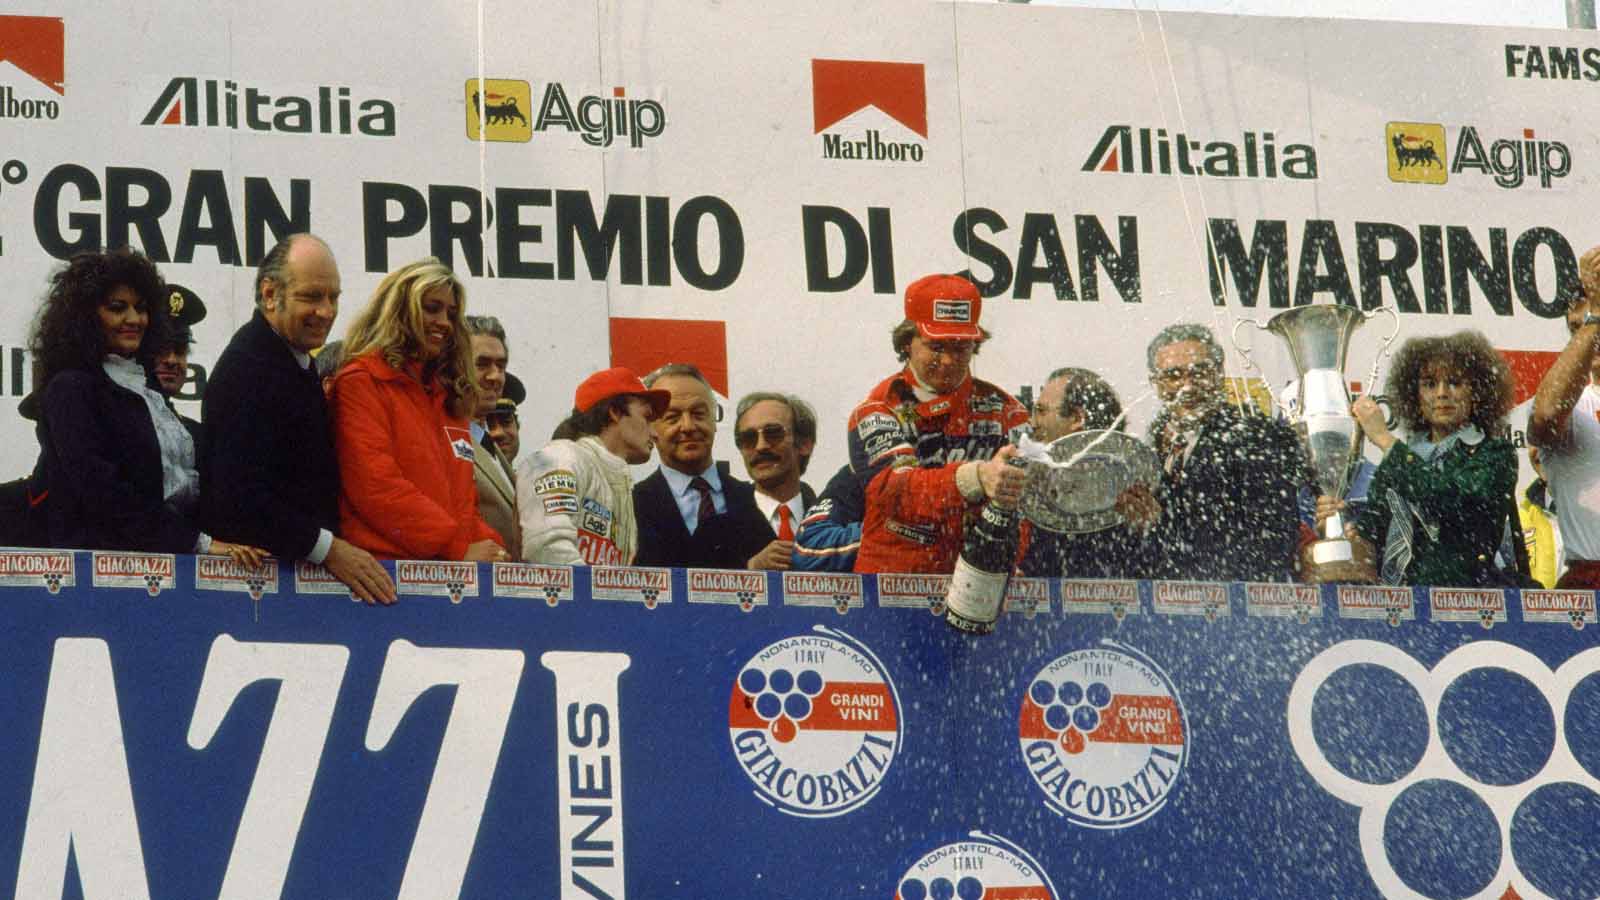 Didier Pironi and Gilles Villeneuve on the podium. San Marino 1982.